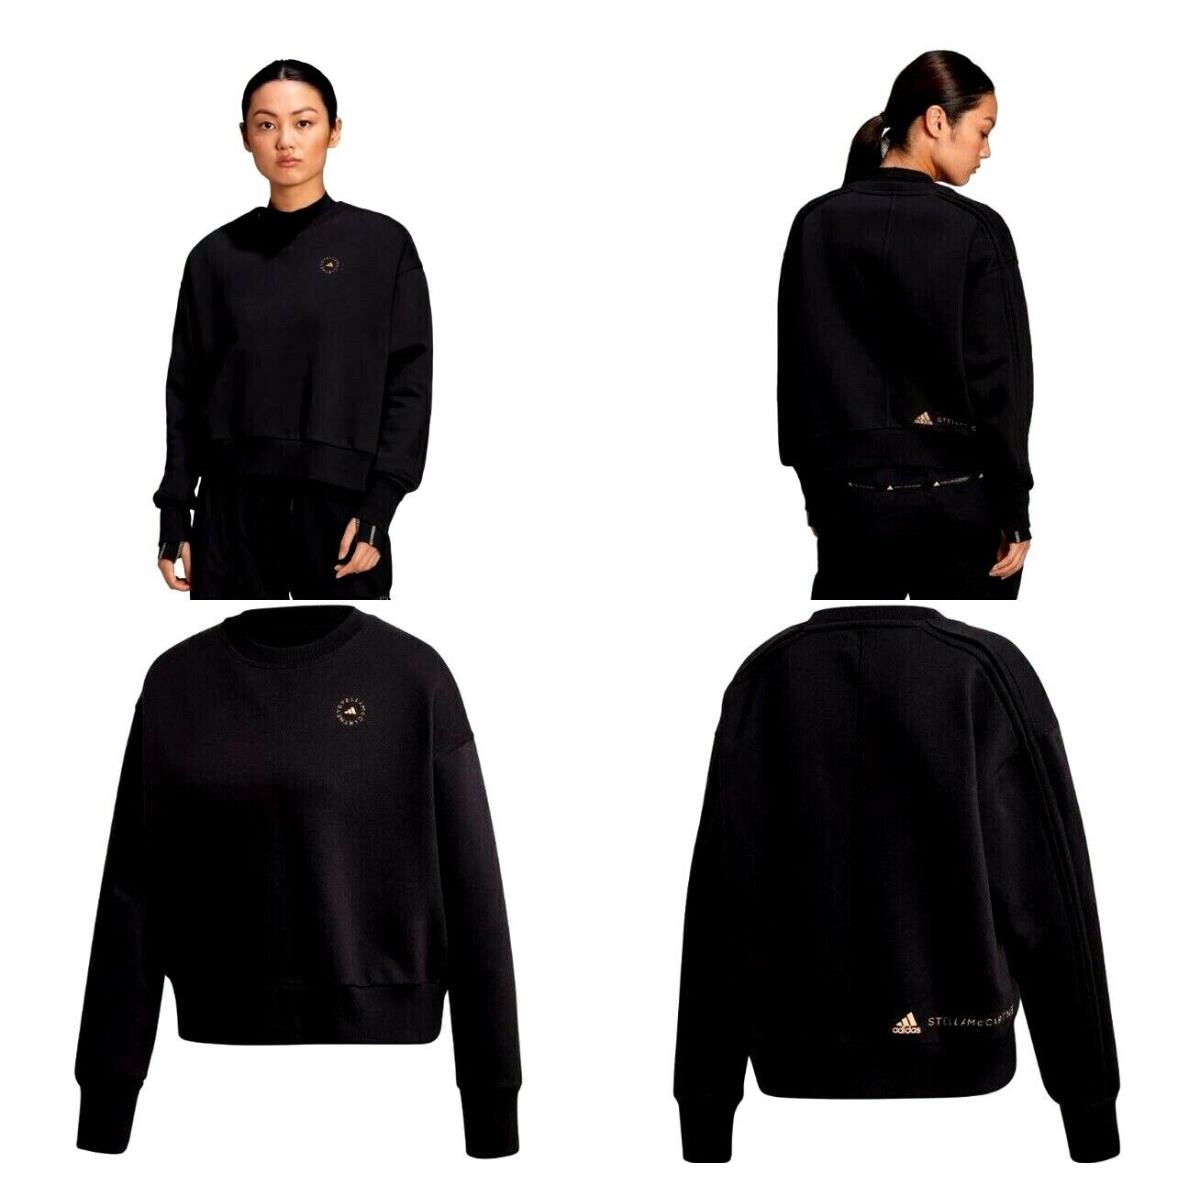 Adidas X Stella Mccartney Loose Fit Cotton Sweatshirt Black Color Medium FU0720